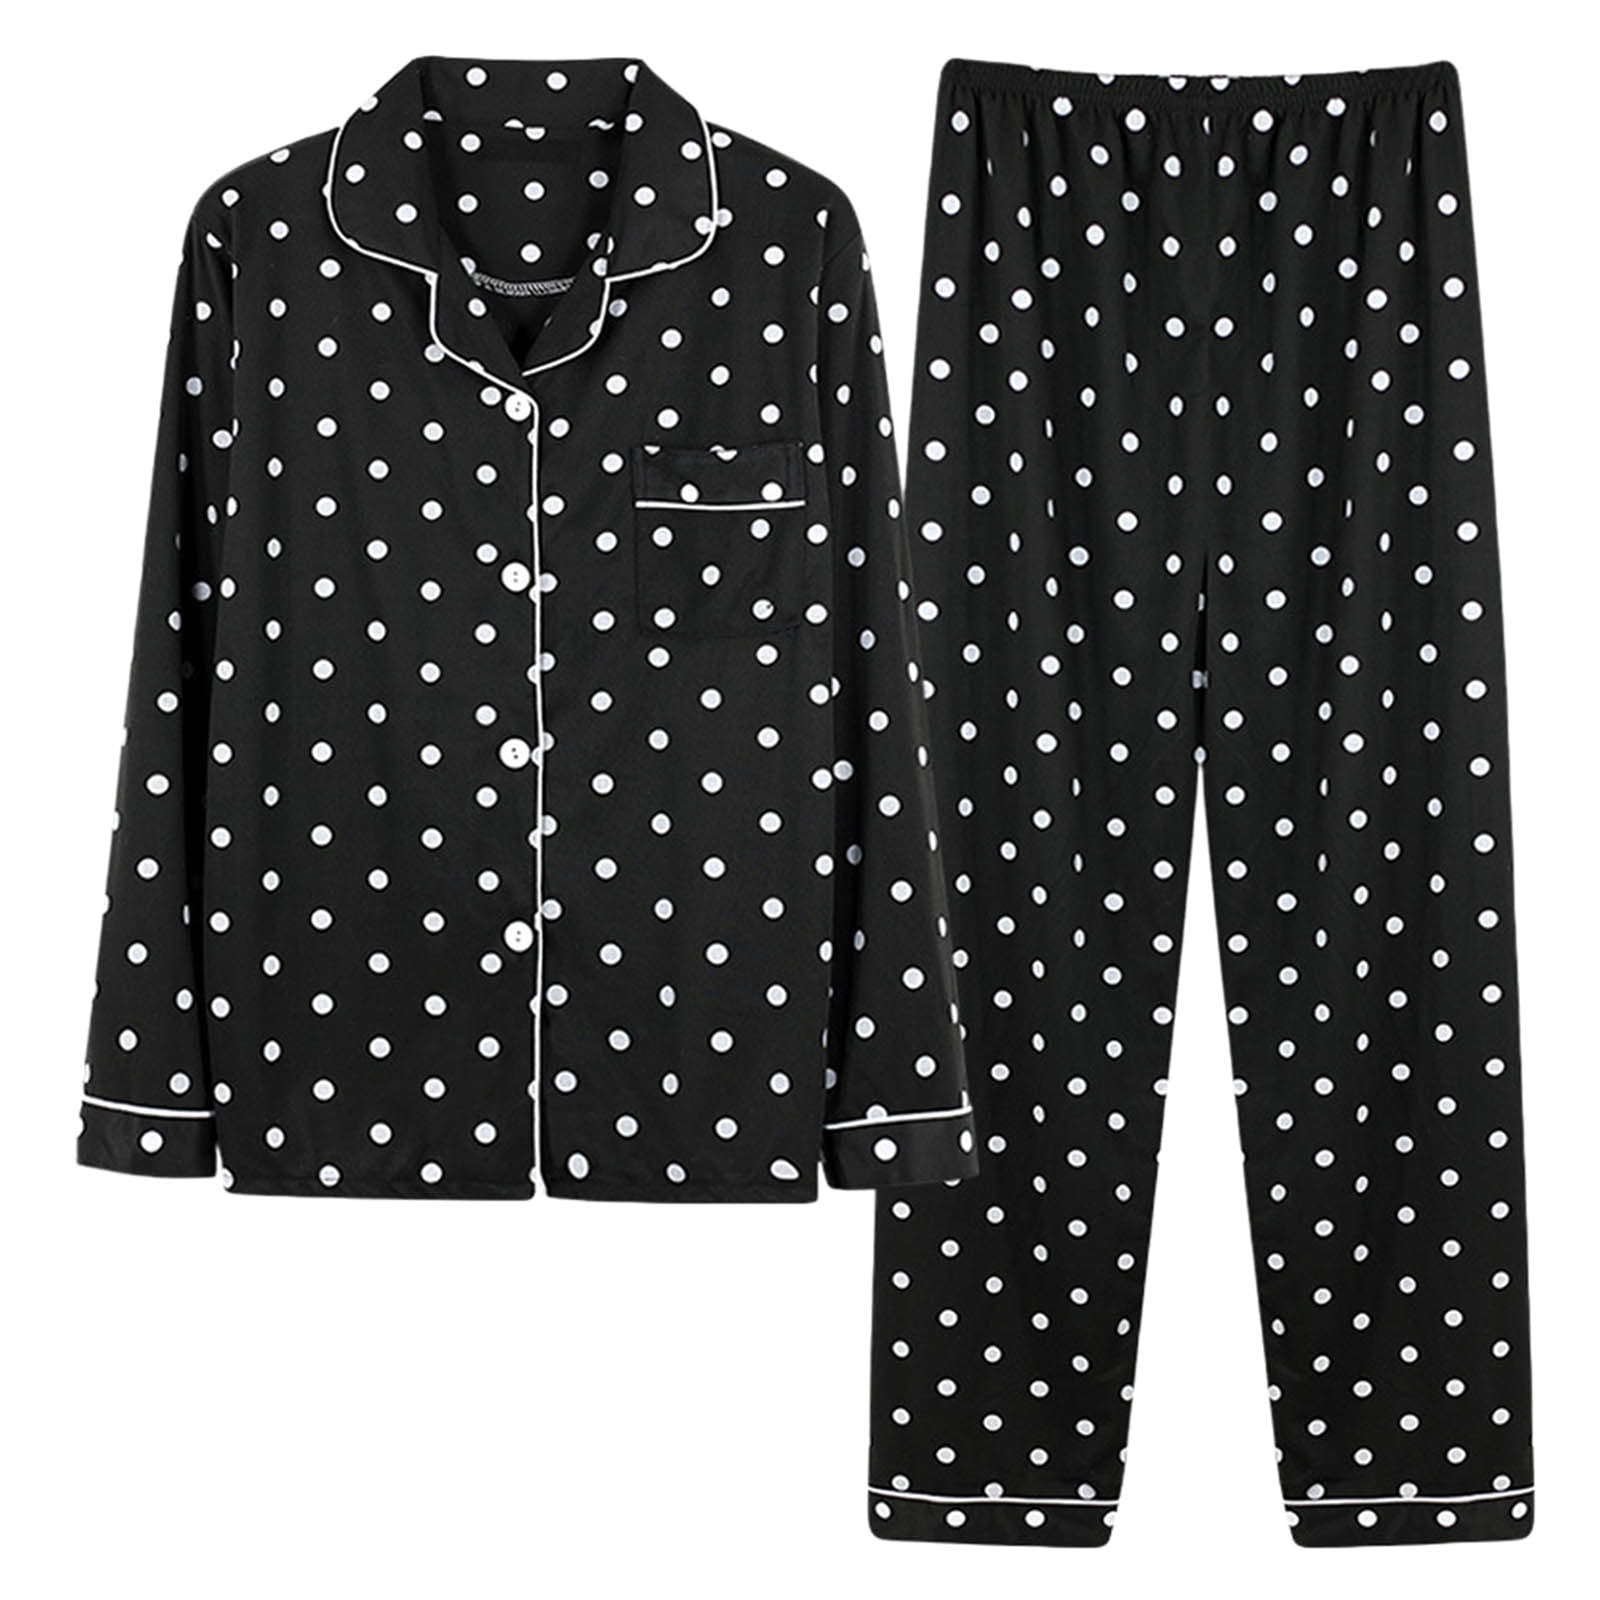 BLVB Pajamas for Women PJ Set Button-Down Soft Long Sleeve Shirts Loose ...